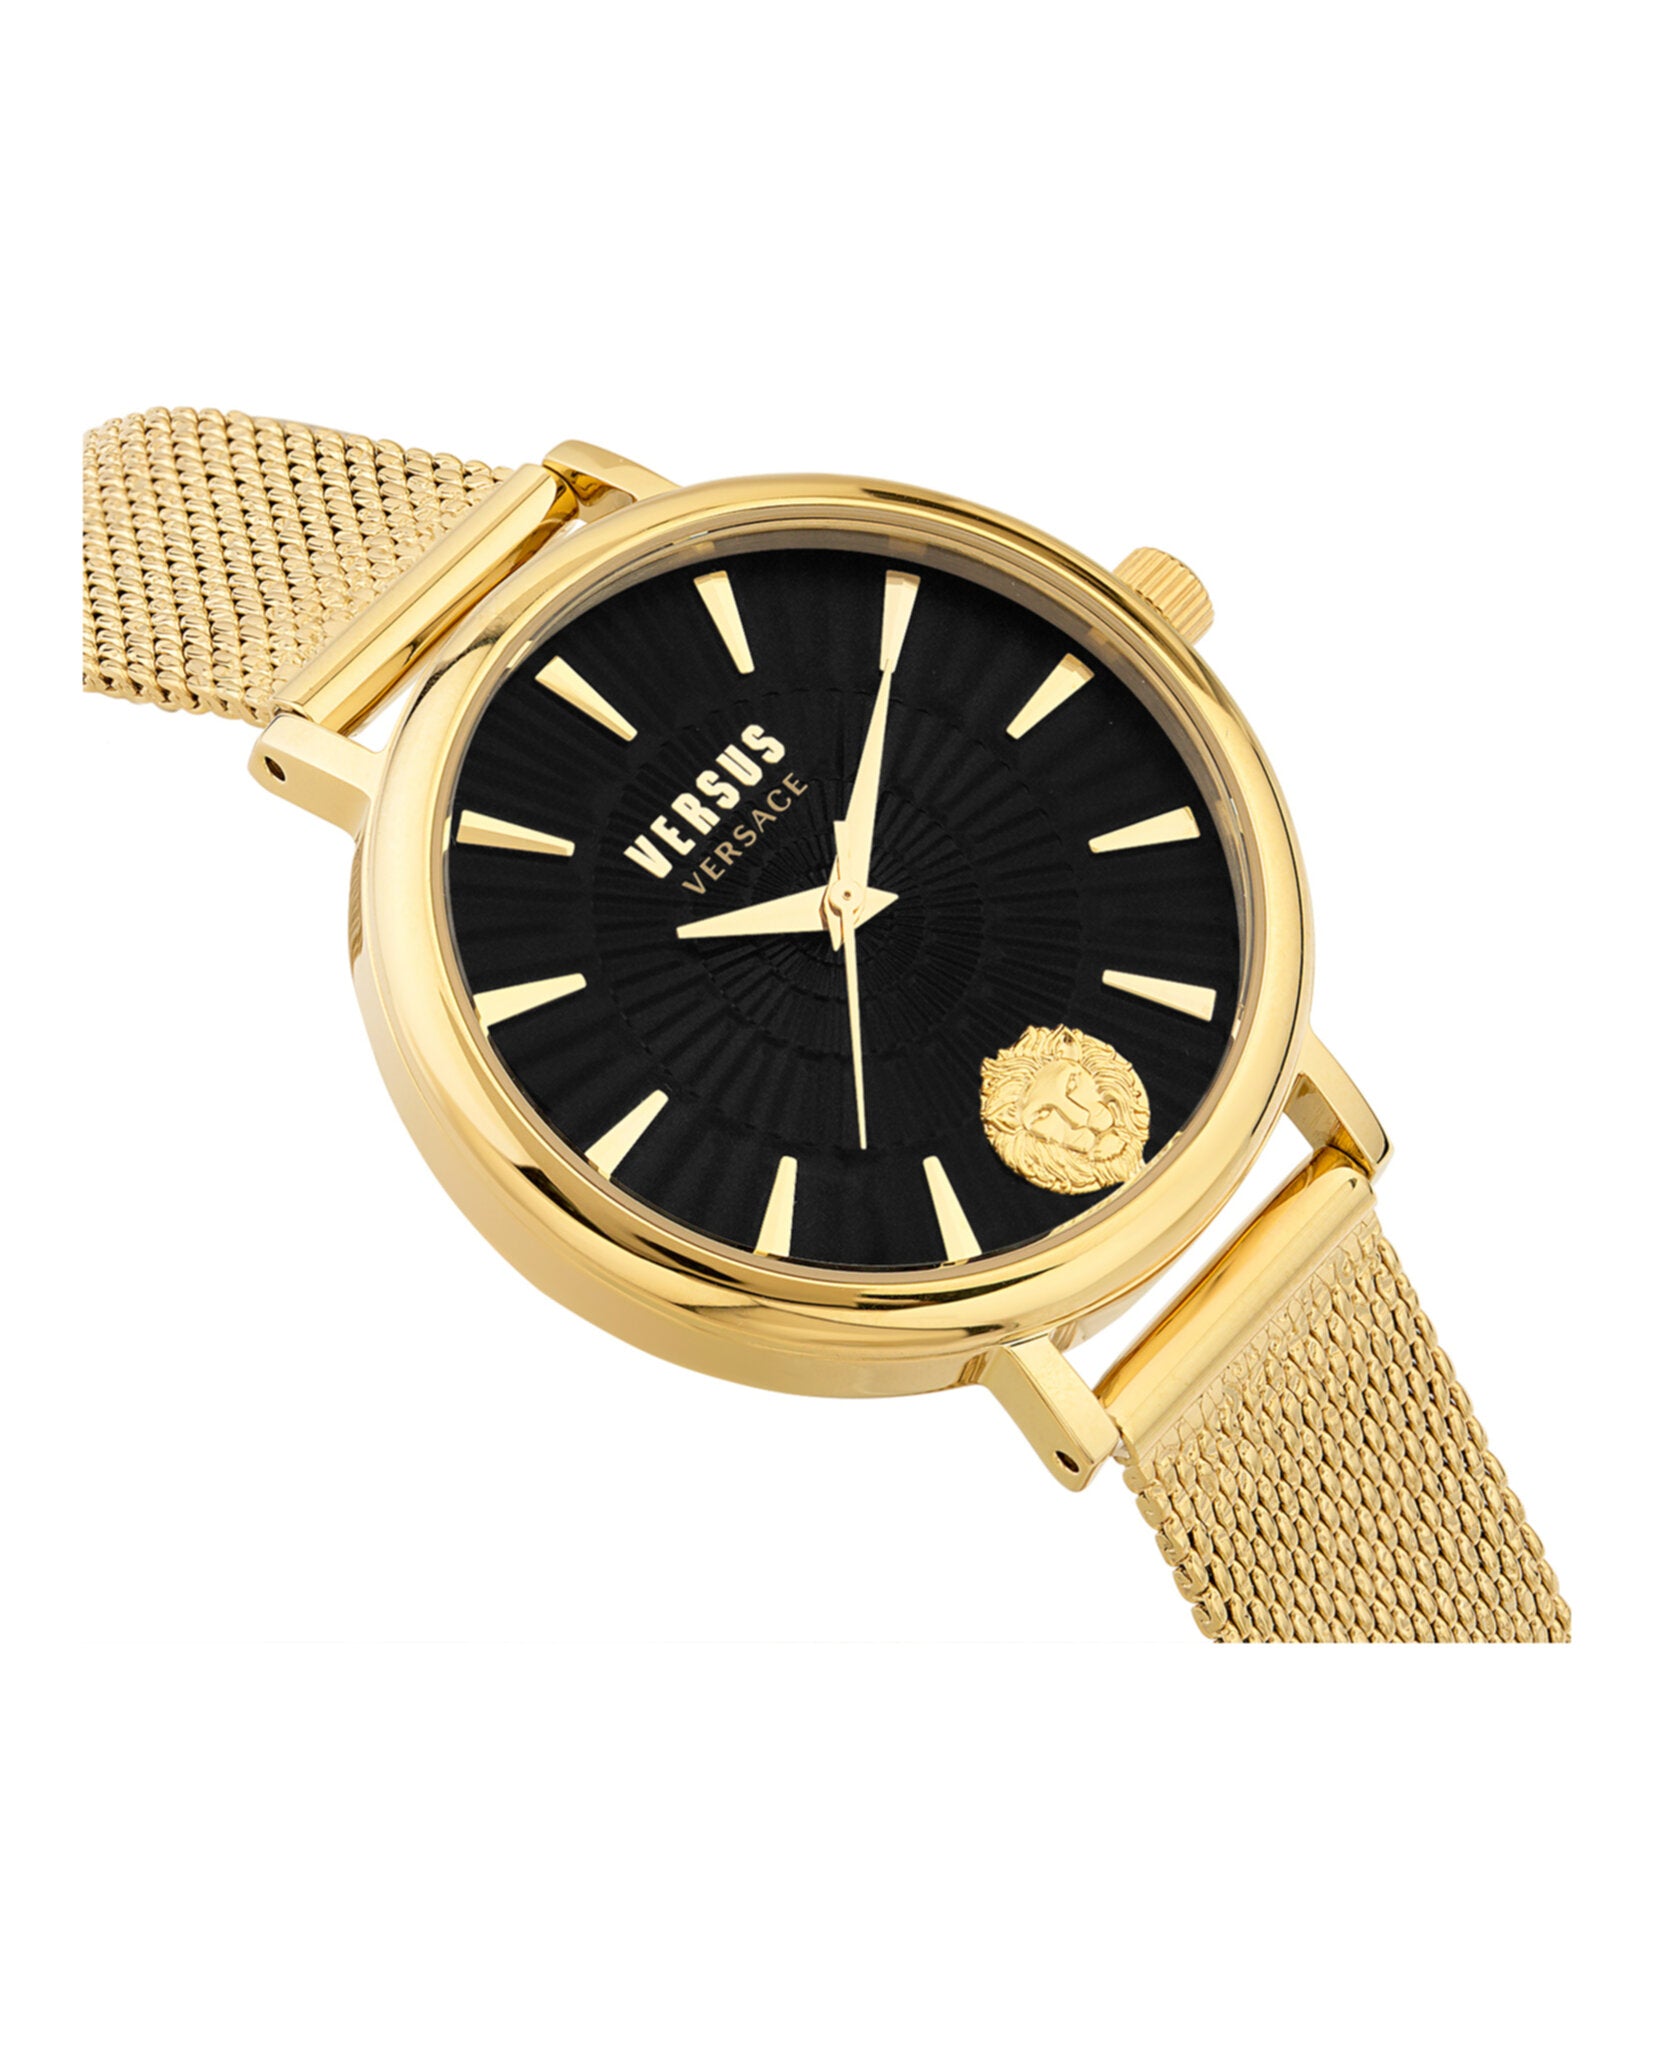 Mar Vista Bracelet Watch